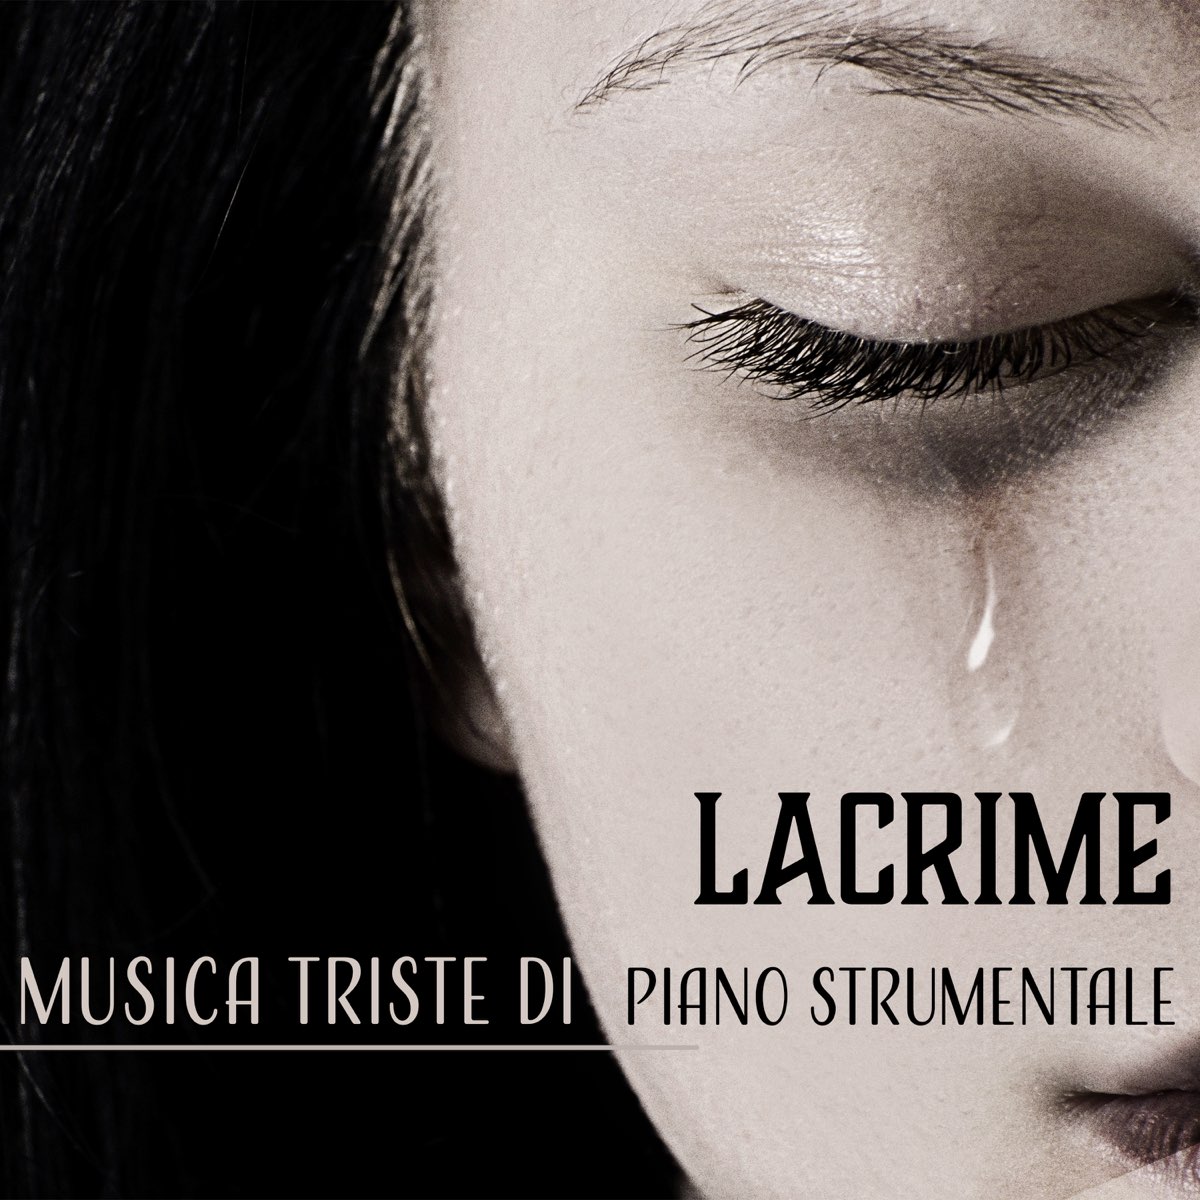 Lacrime Musica Triste Di Piano Strumentale By Cure Depression Music Academy On Apple Music